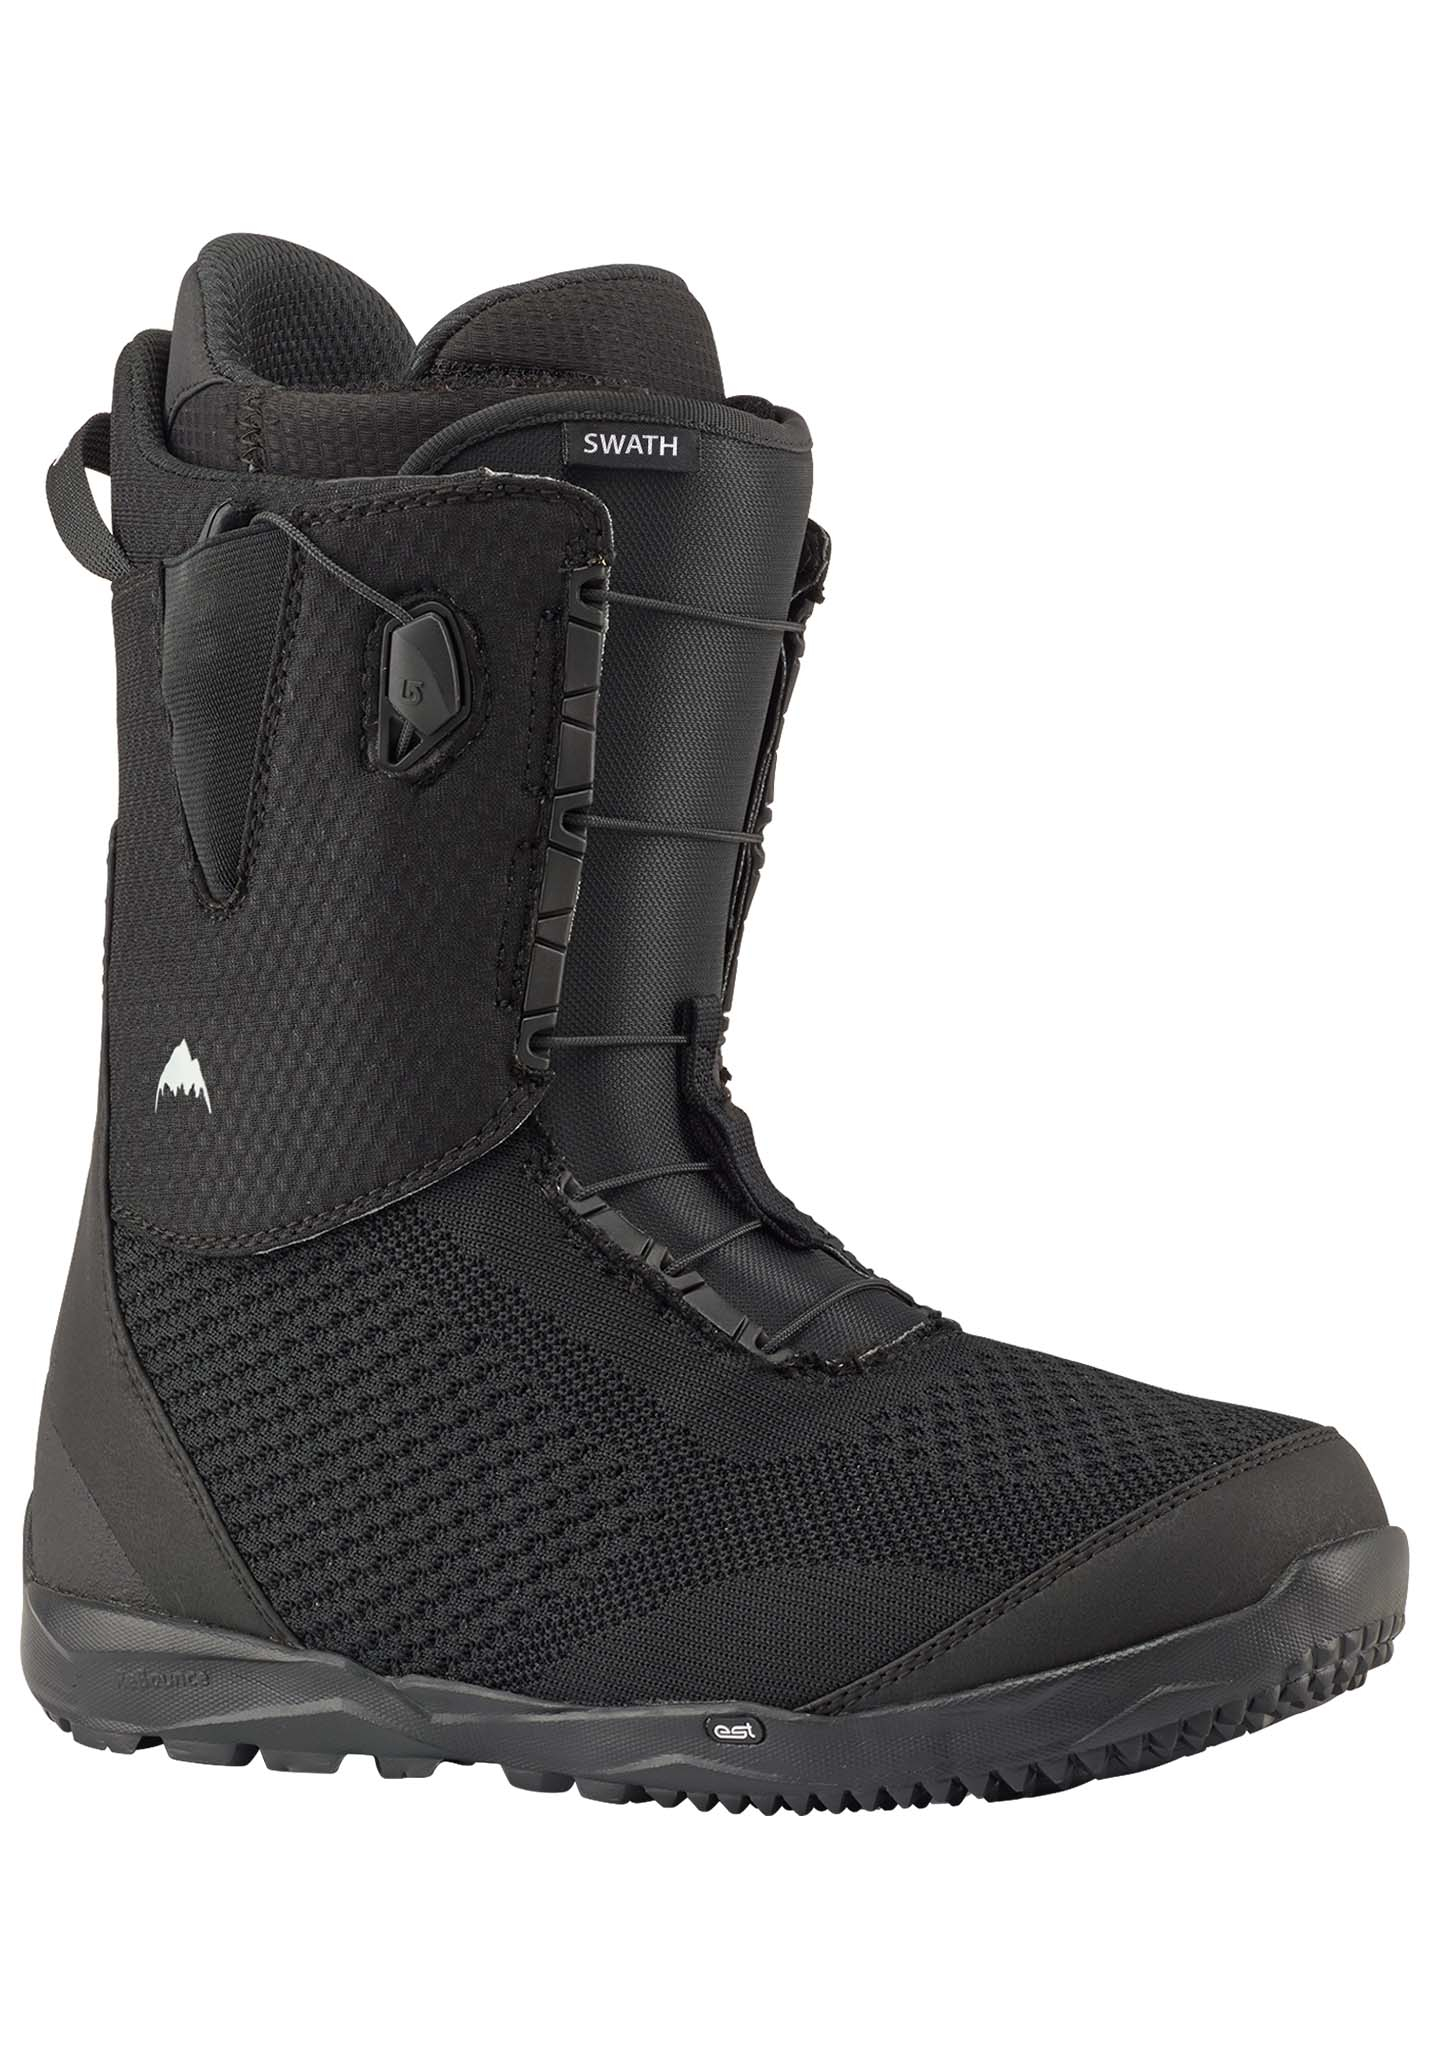 Burton Swath Snowboard Boots black 48